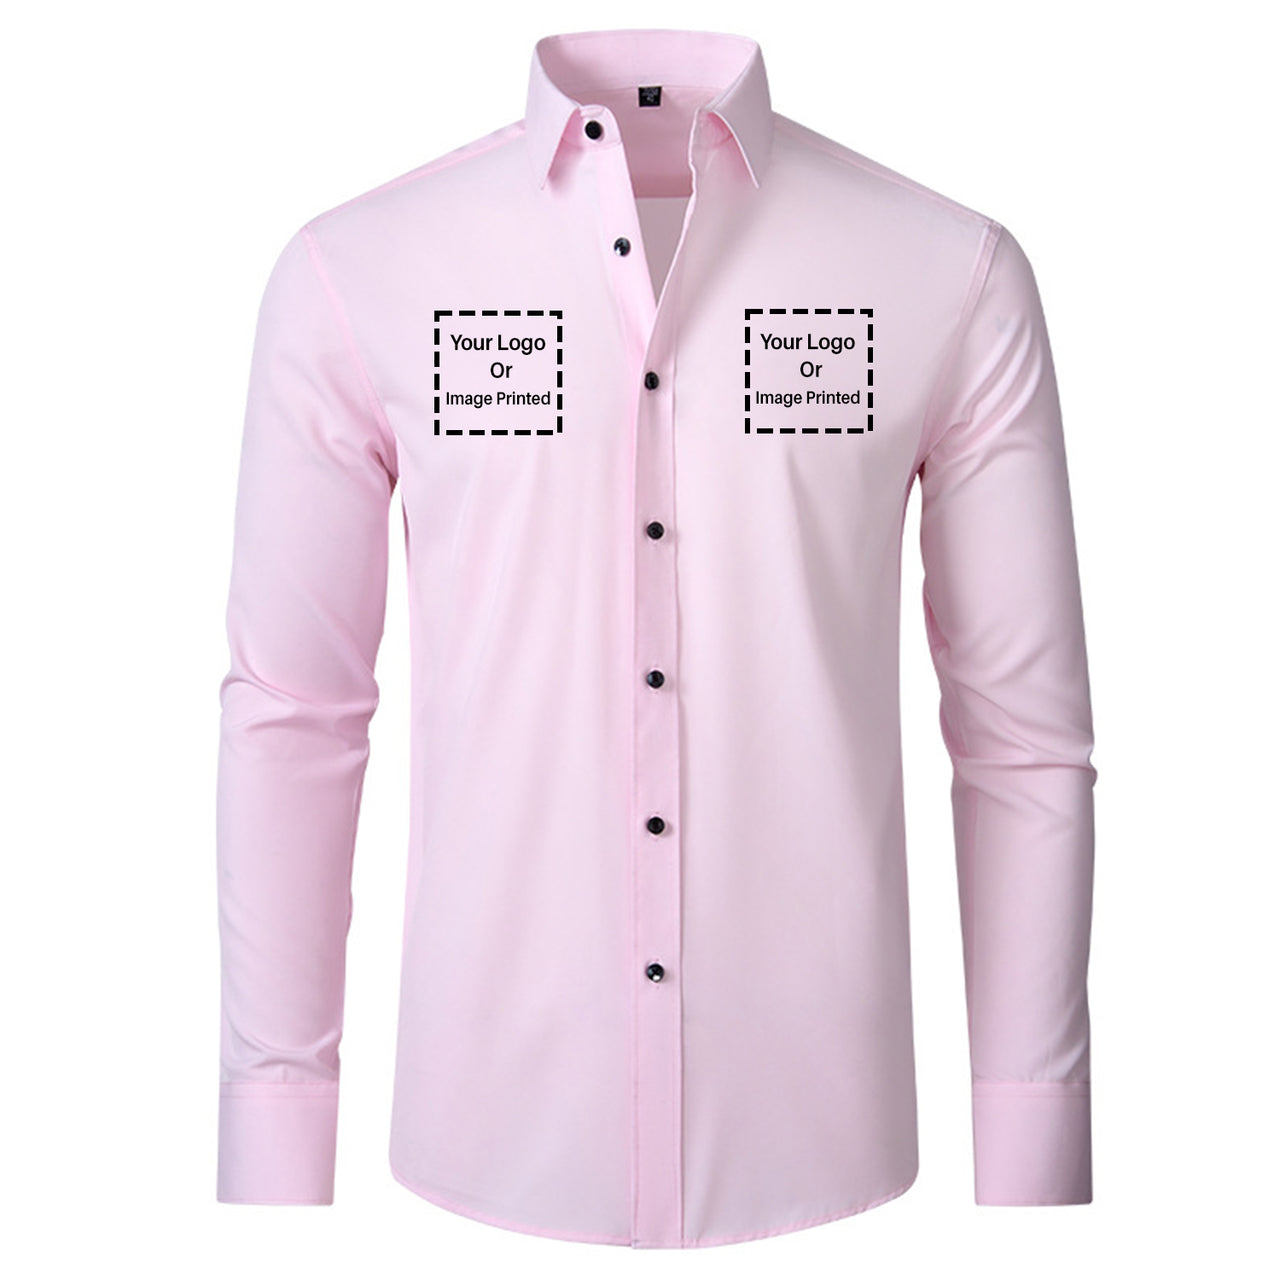 Custom TWO LOGOS Designed Long Sleeve Shirts